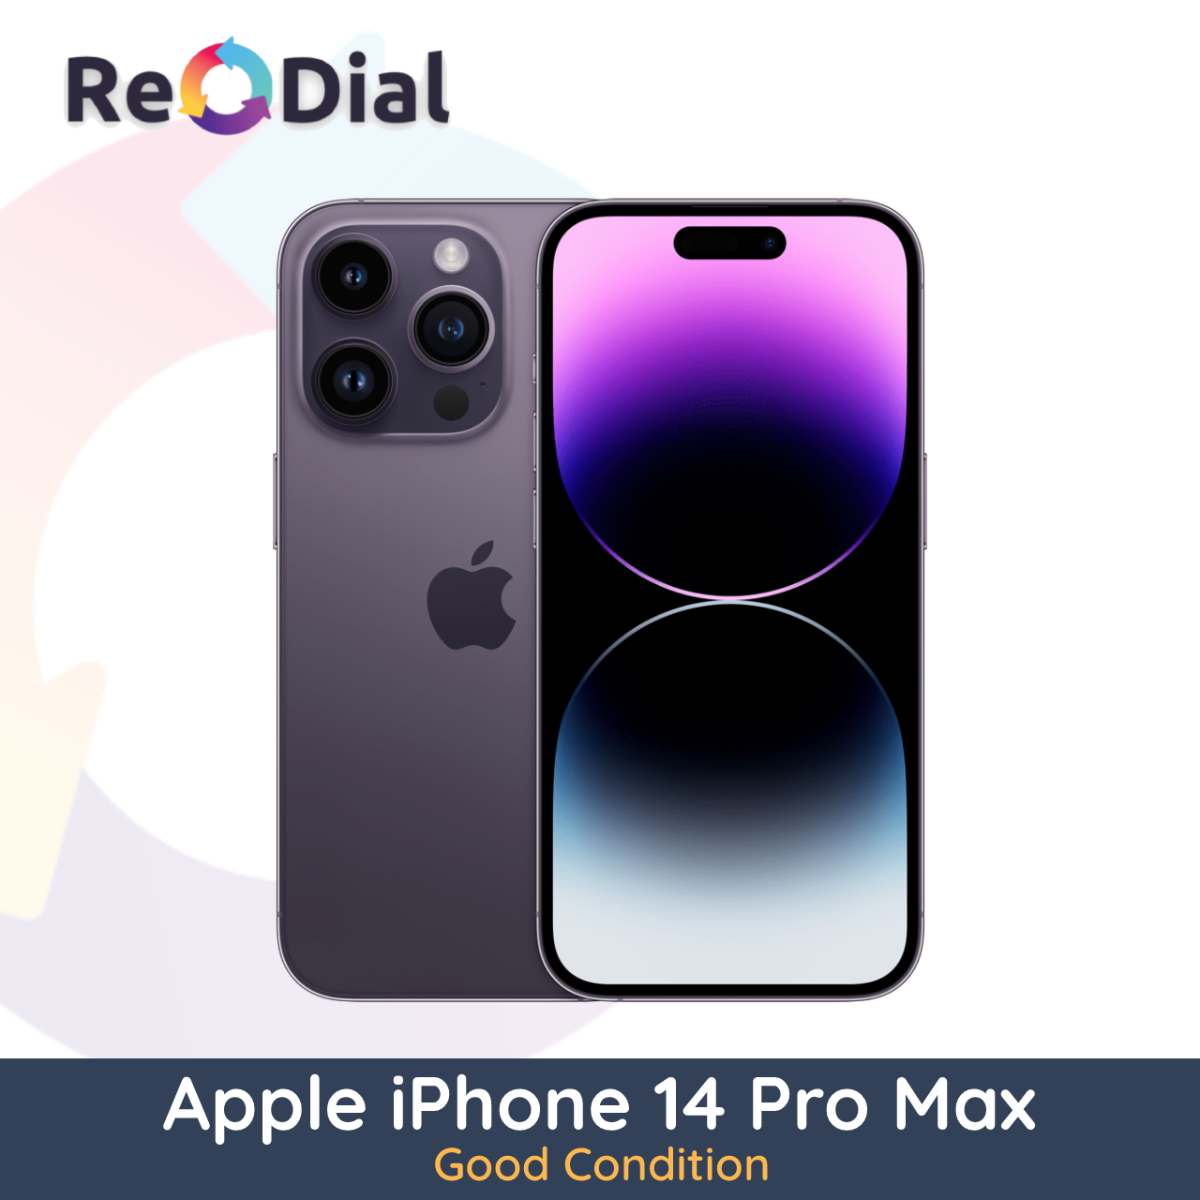 Apple iPhone 14 Pro Max - Good Condition